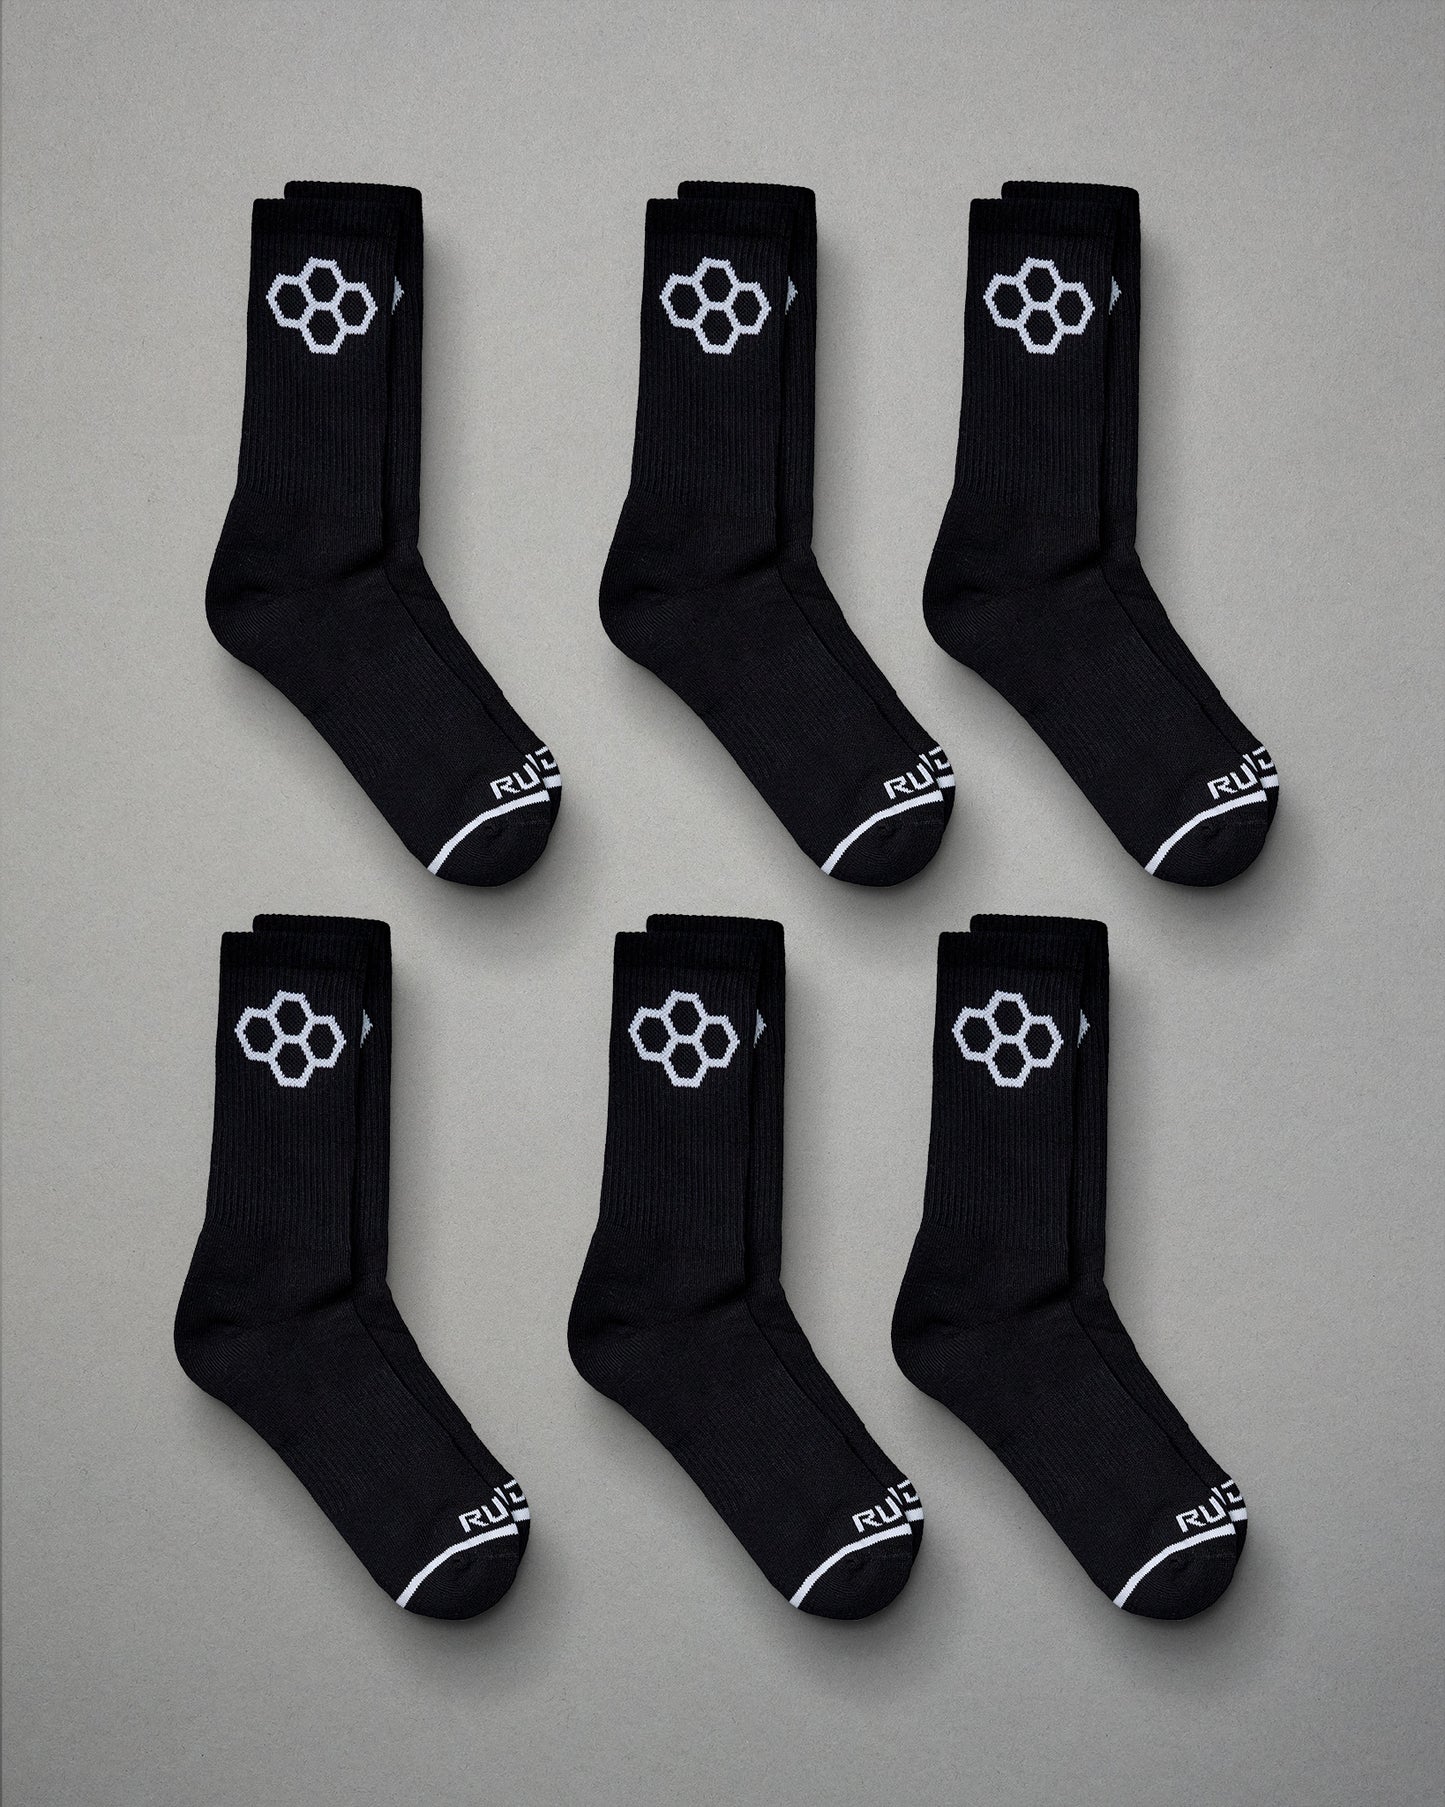 RUDIS Black Cushion Crew Socks (6 Pair)